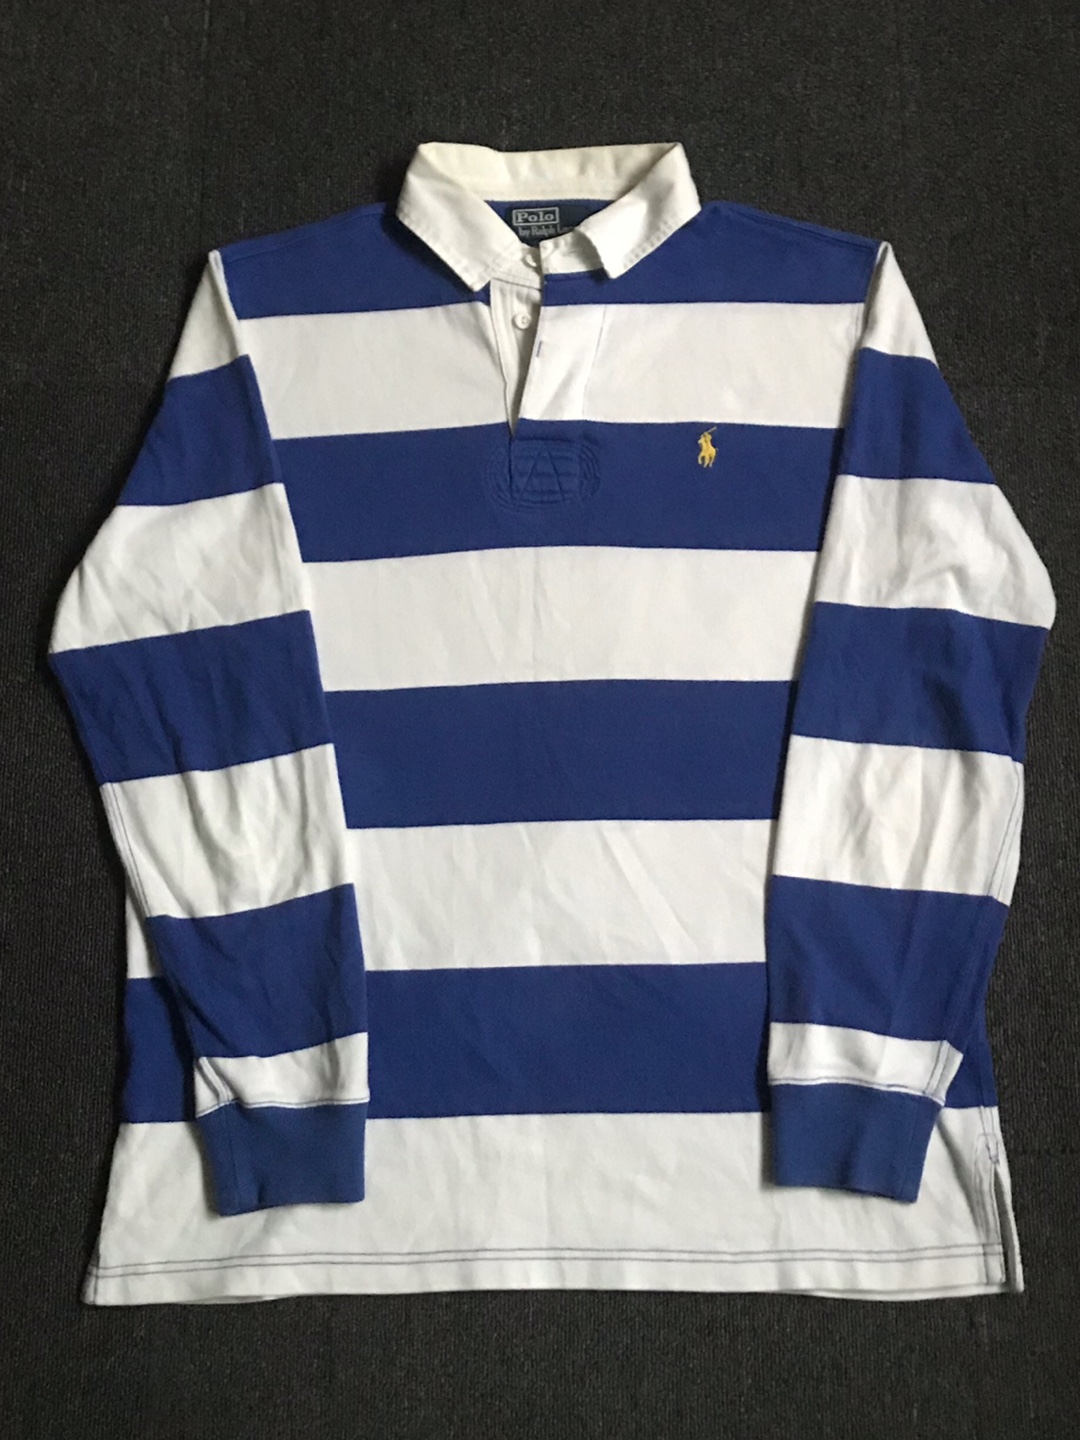 Polo RL stripe rugby shirt (L size, ~103 추천)